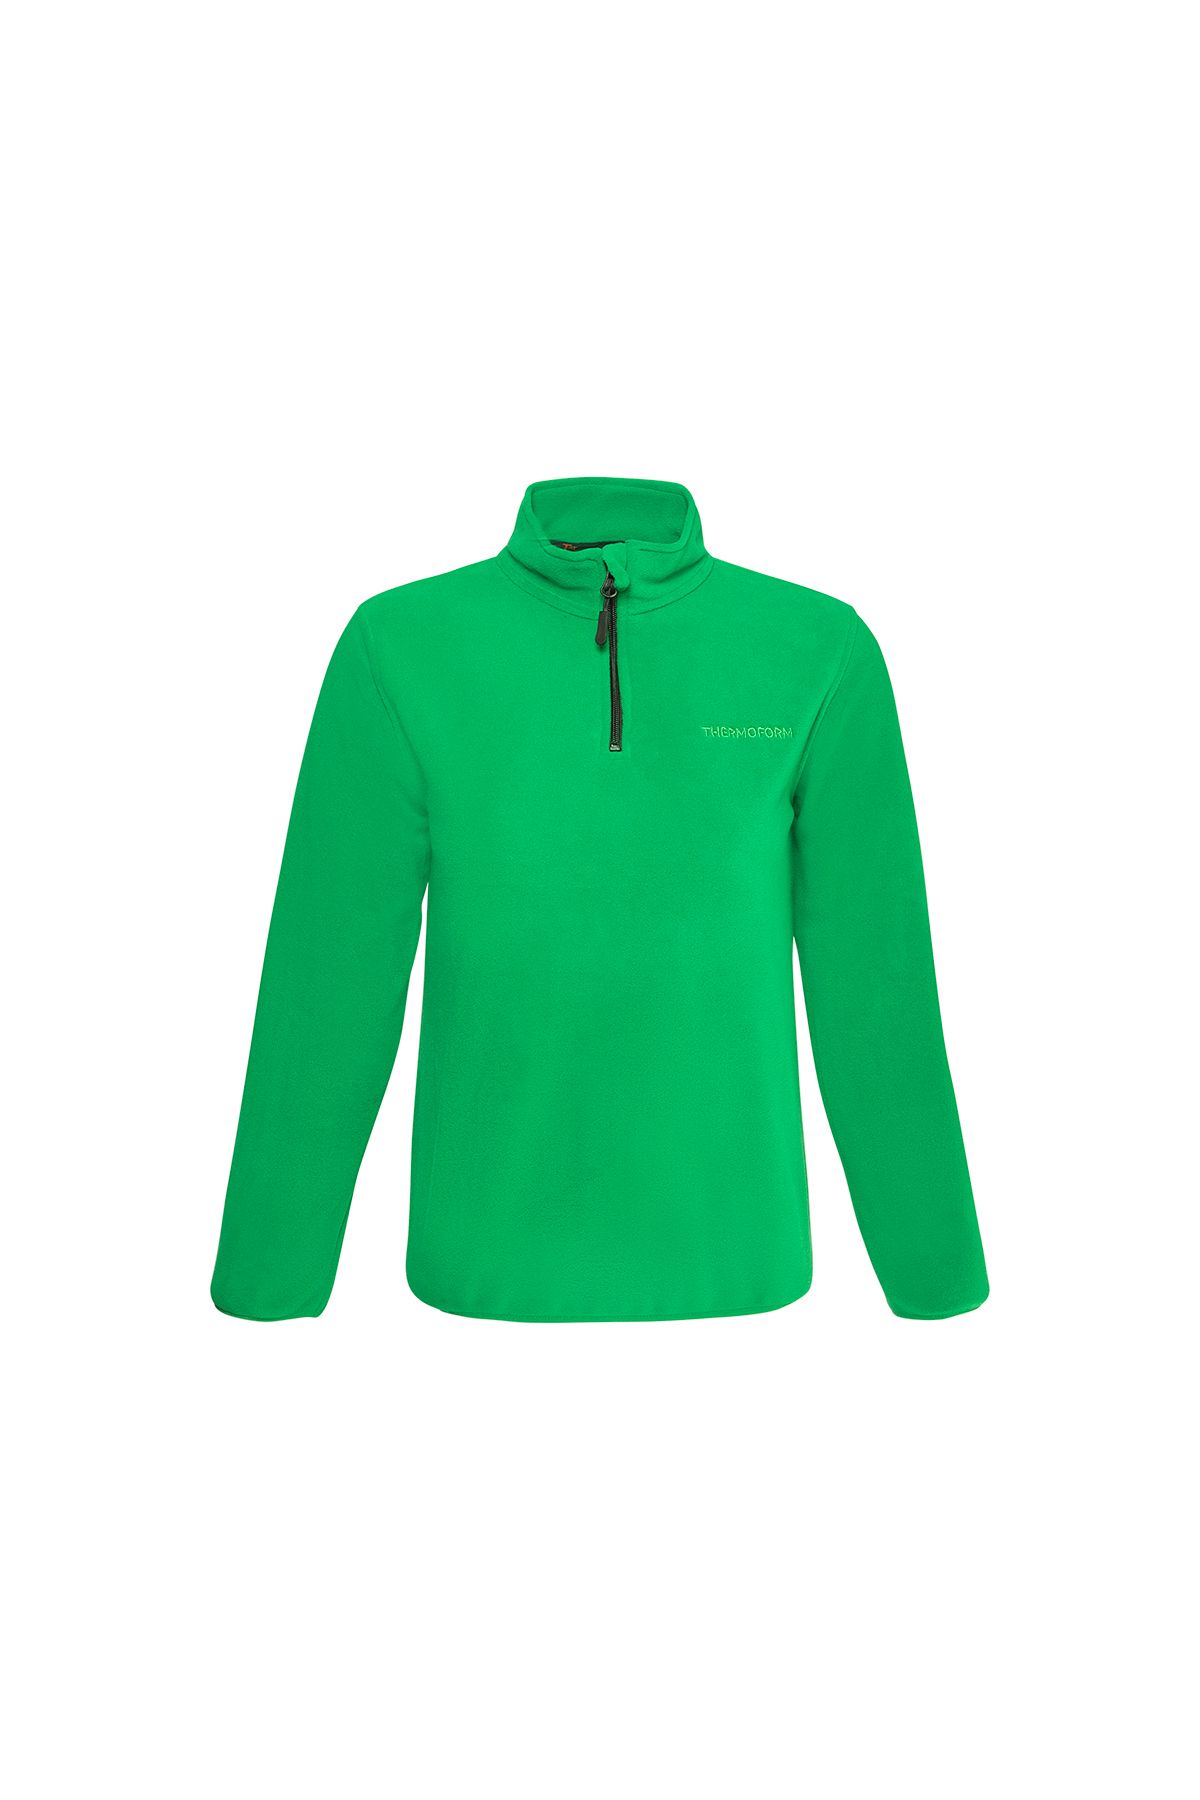 Thermoform Polarline Çocuk 1/4 Fermuar Sweatshirt Yeşil